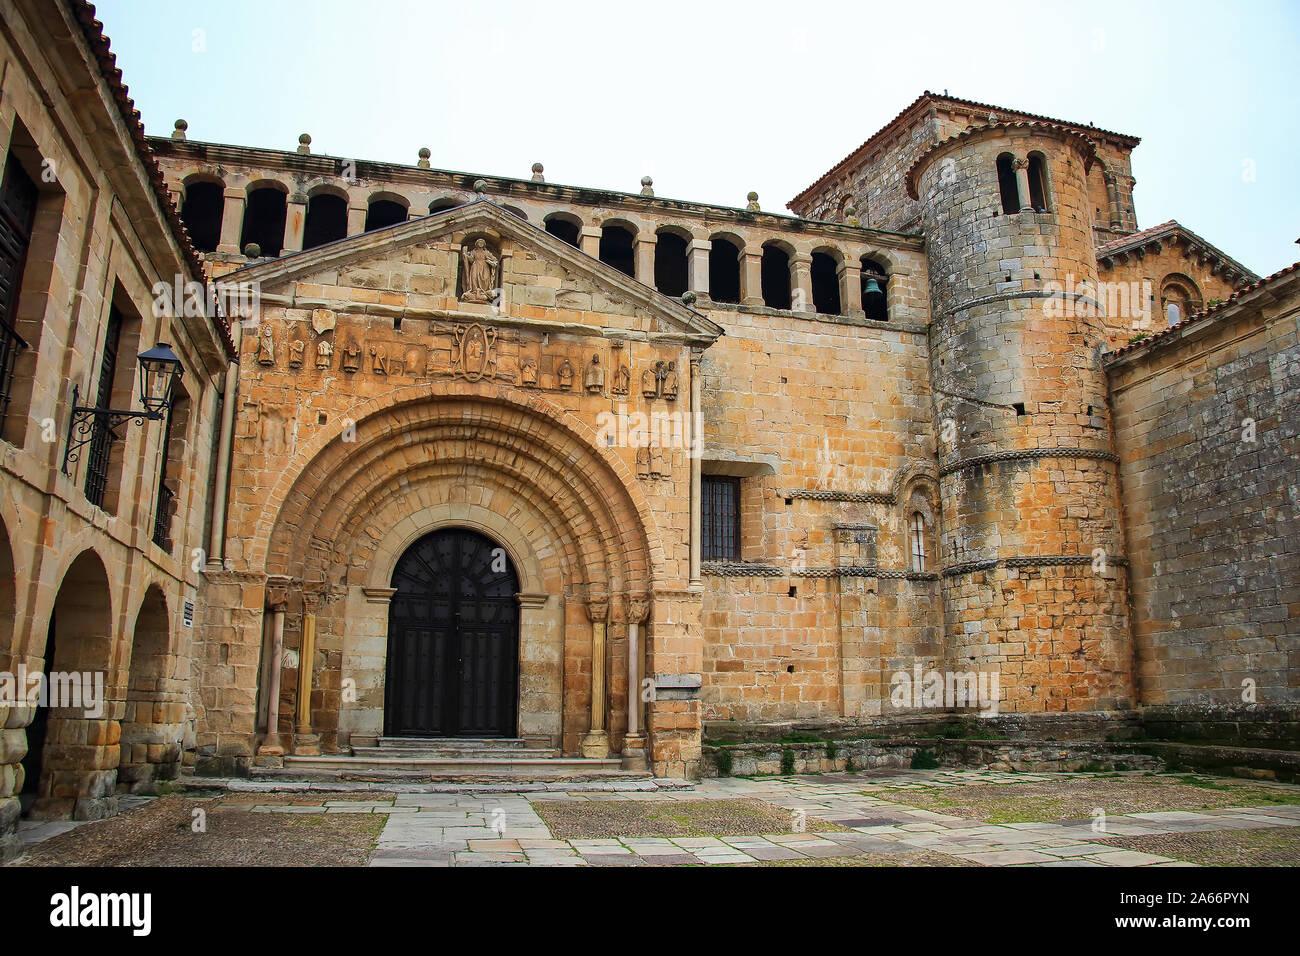 Santillana del Mar, collégiale romane le coeur de Santillana del Mar. L'église a ses origines dans un monastère datant de 870. Tradition Banque D'Images